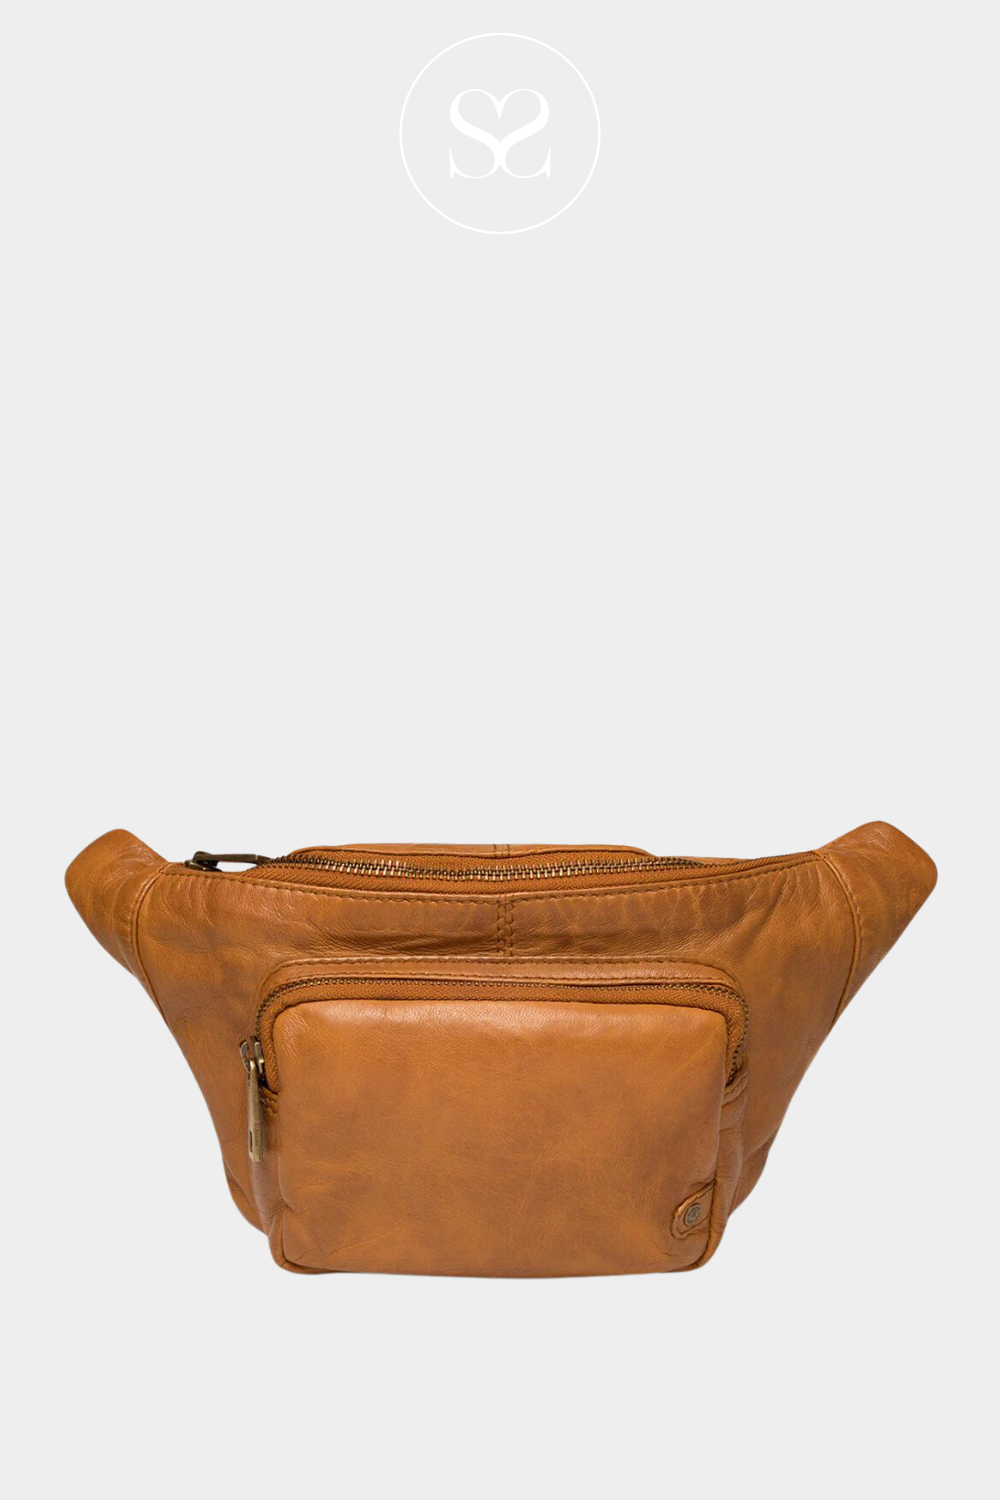 depeche 13396 brown leather crossbody bum bag